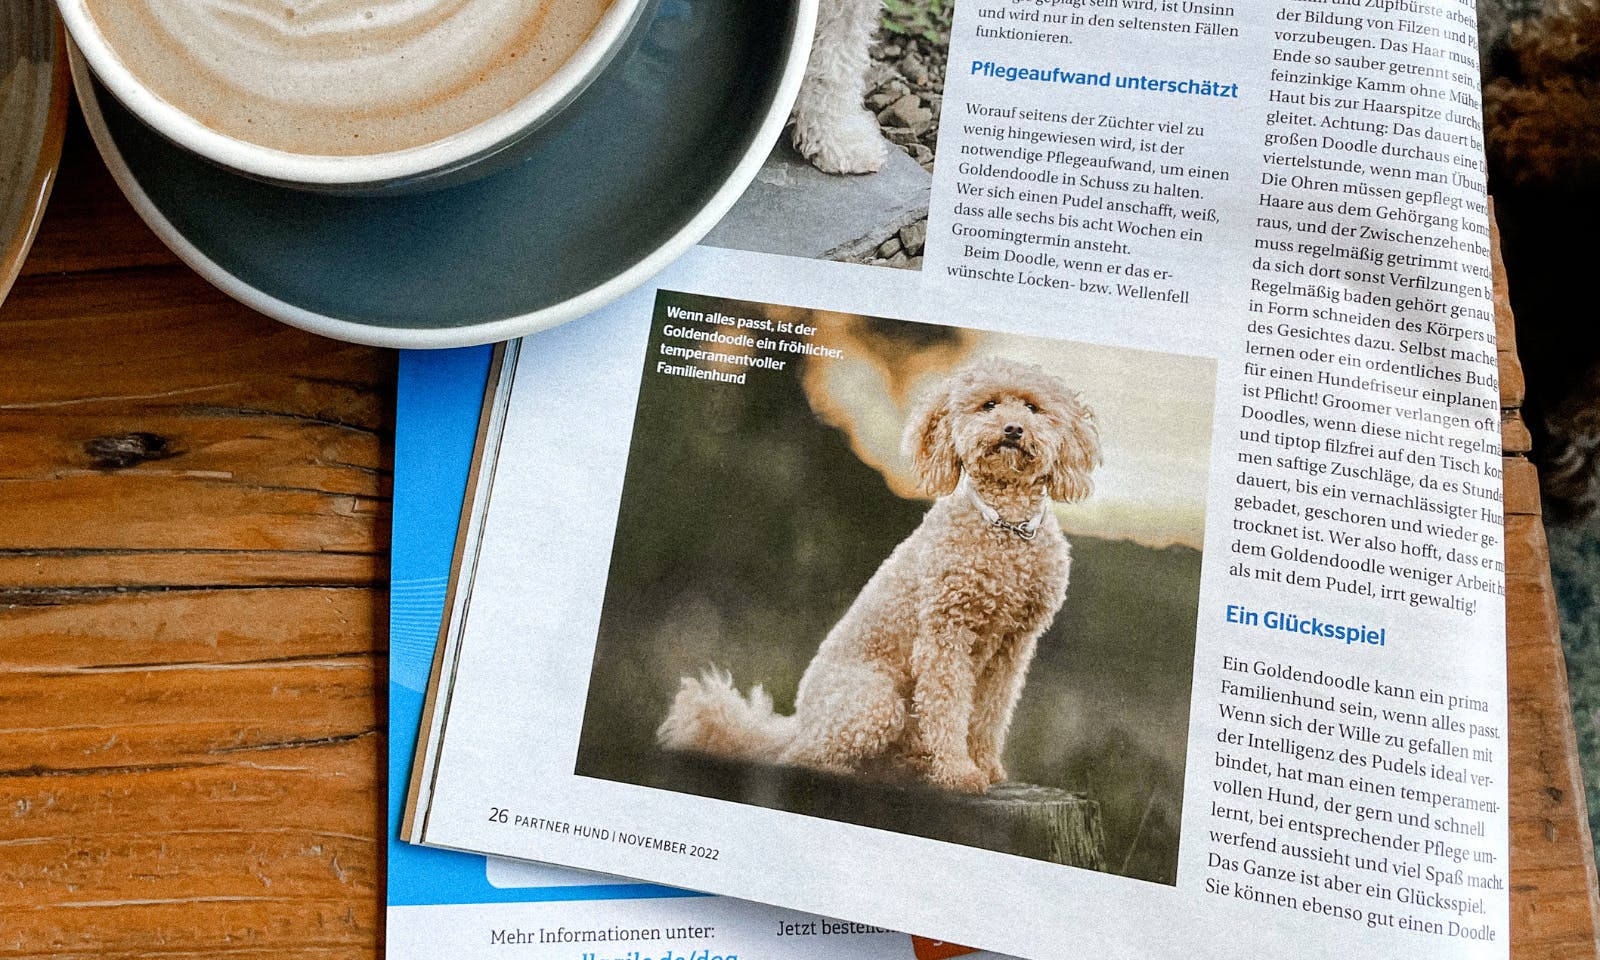 Java Minidoodle in der Partner Hund Zeitung im Goldendoodle Portrait